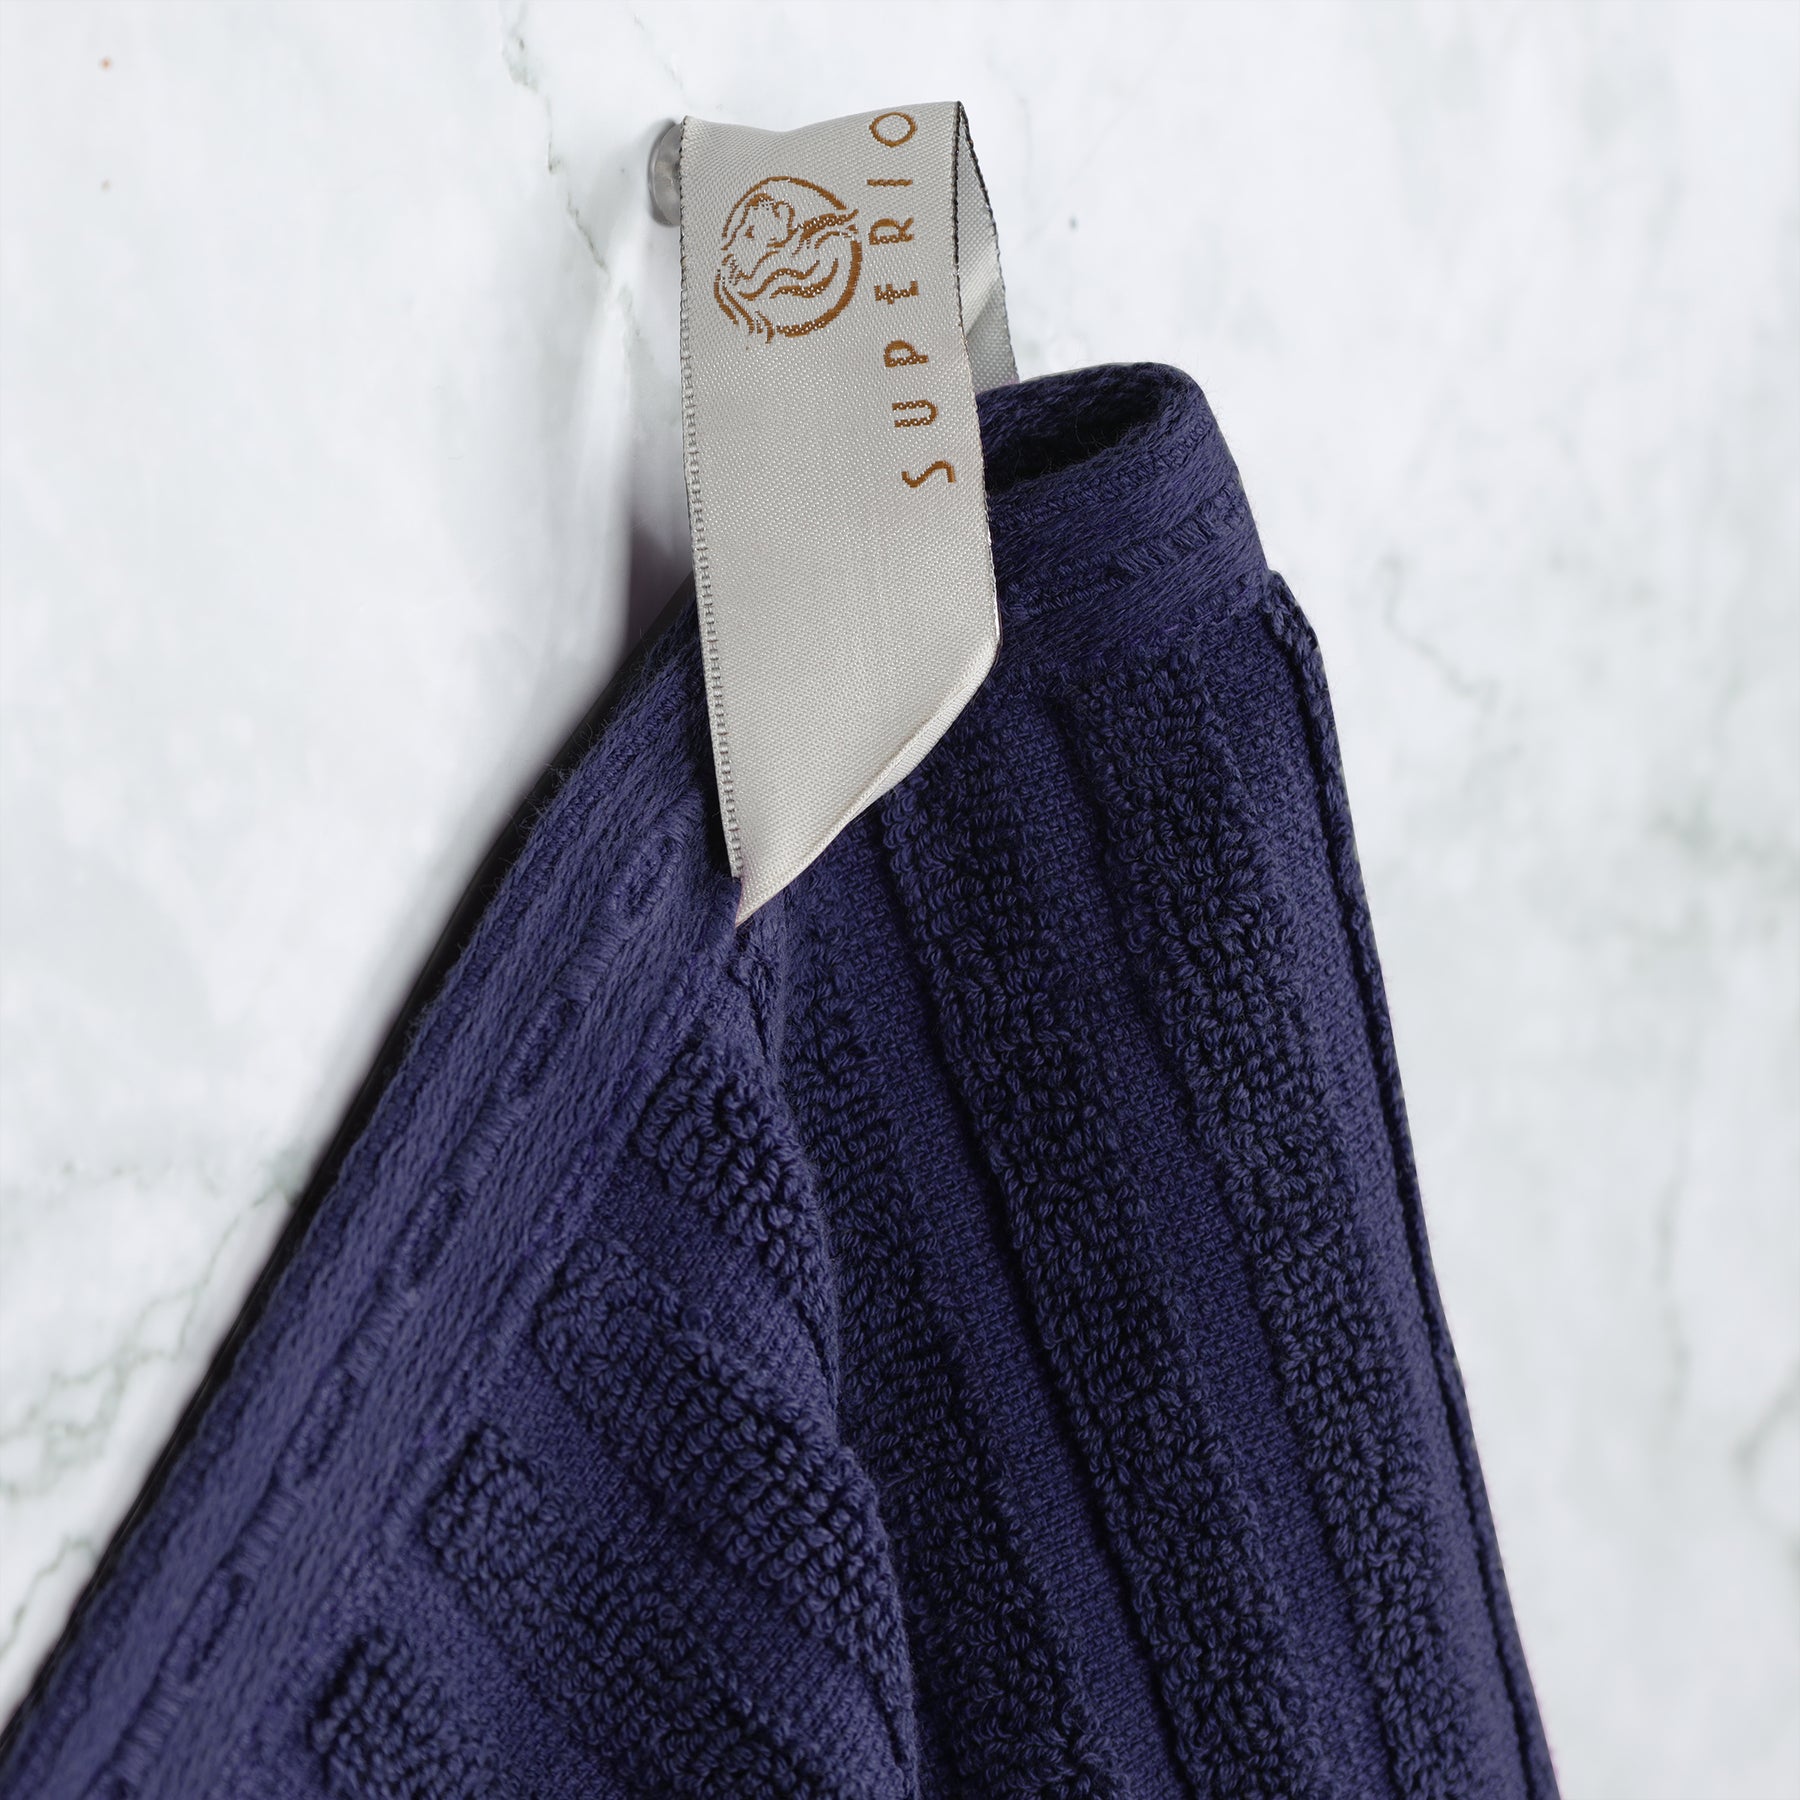 Ribbed Textured Cotton Medium Weight 6 Piece Towel Set - Navy Blue